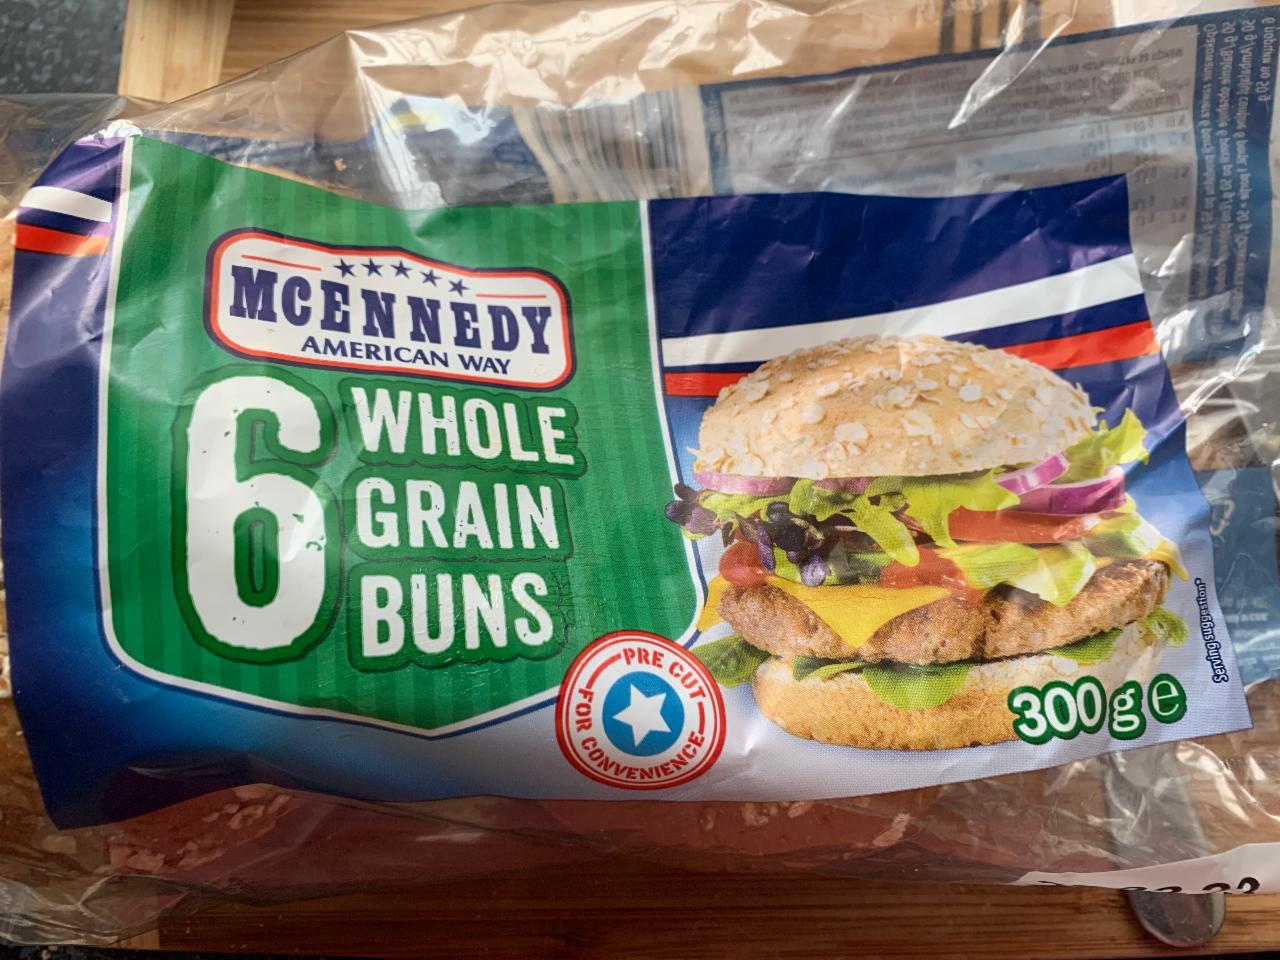 Fotografie - 6 whole grain buns McEnnedy